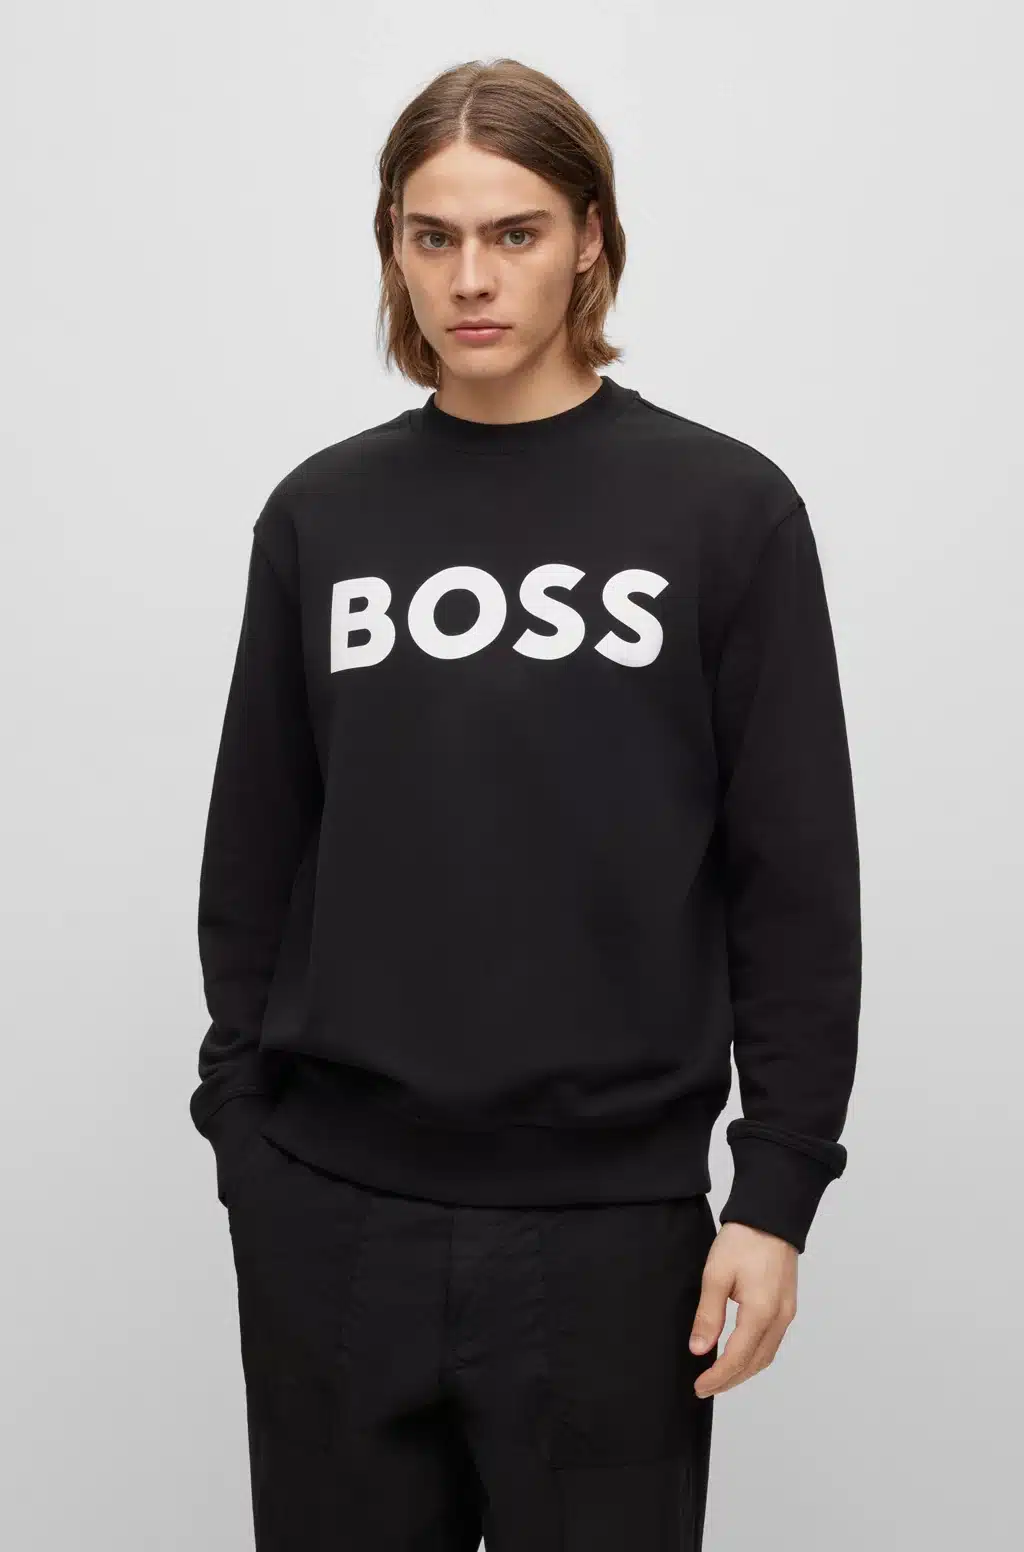 Buy Boss webasic Crew Black - Scandinavian Fashion Store